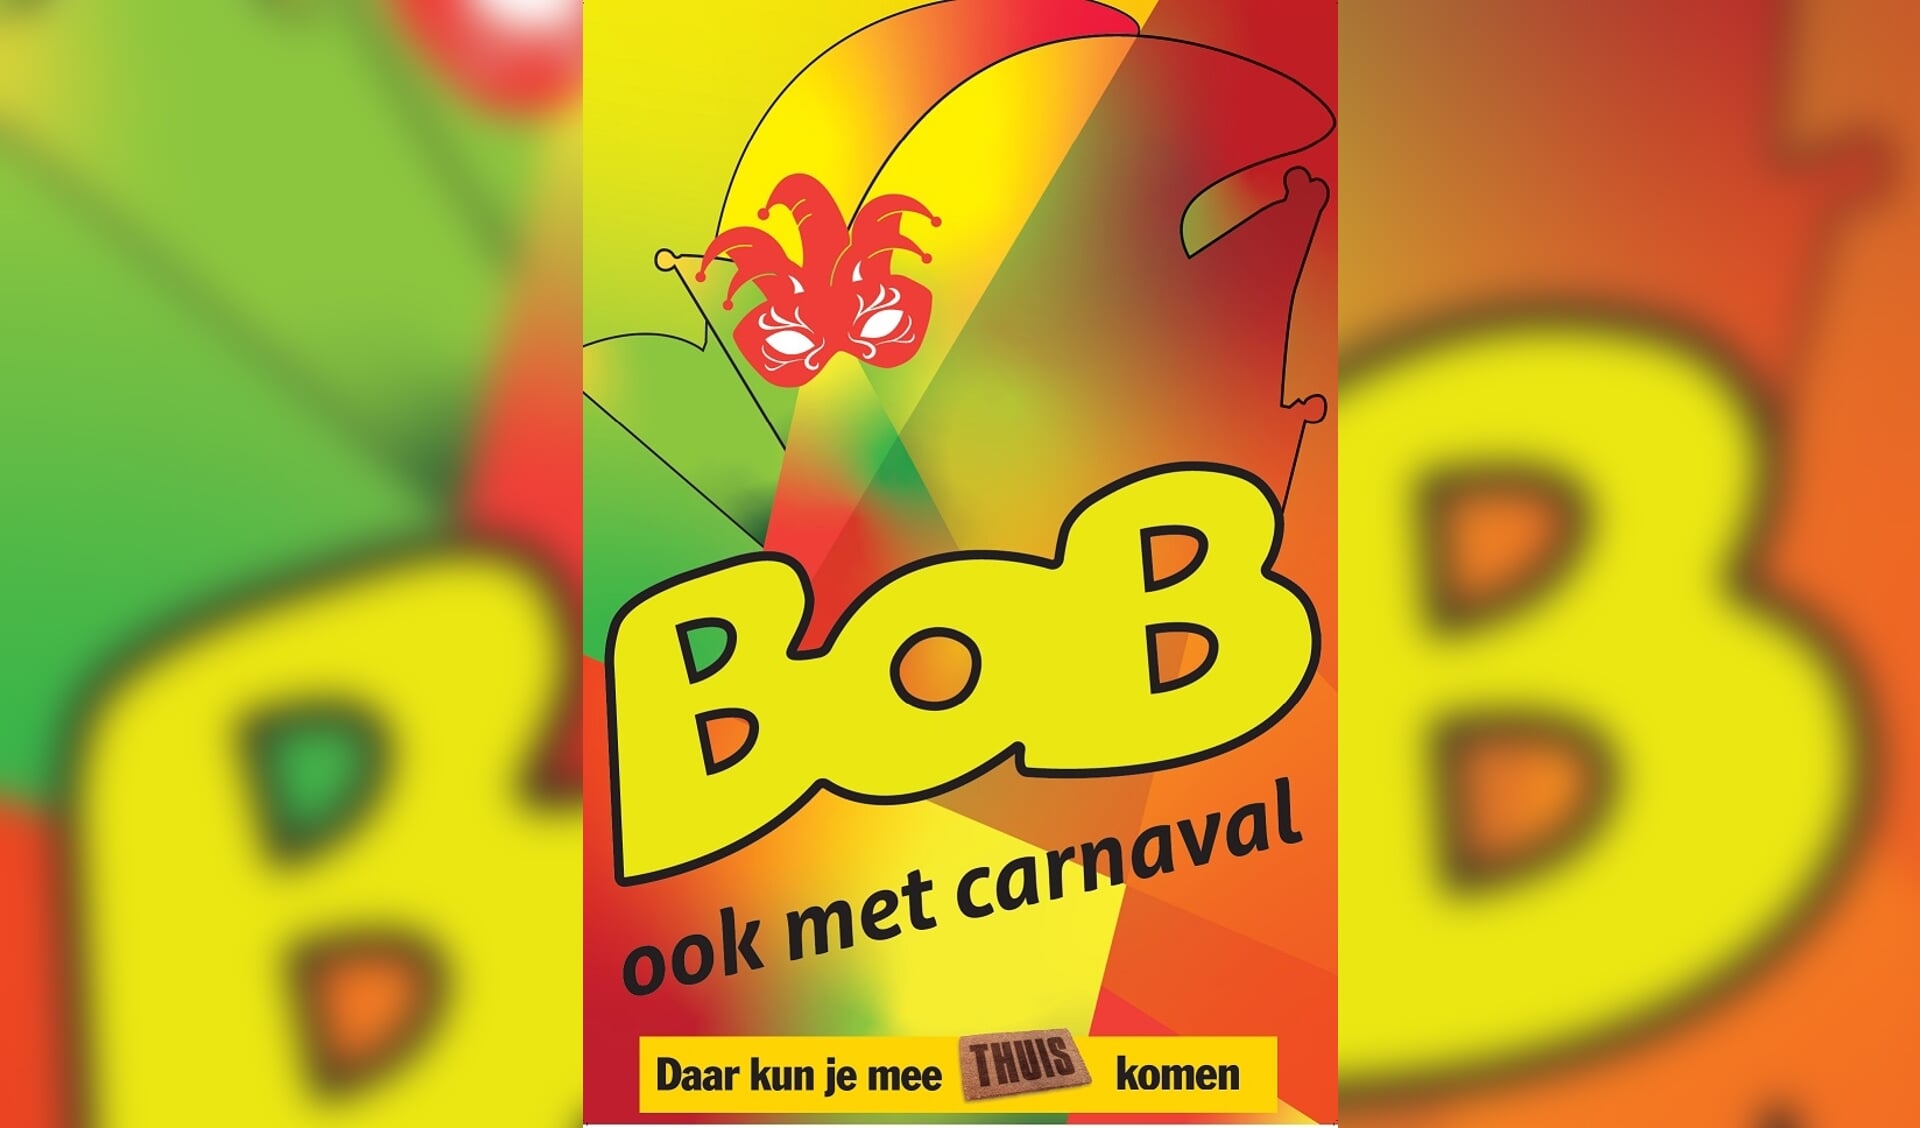 Maandag 27 januari start de CarnavalsBob-campagne in Limburg